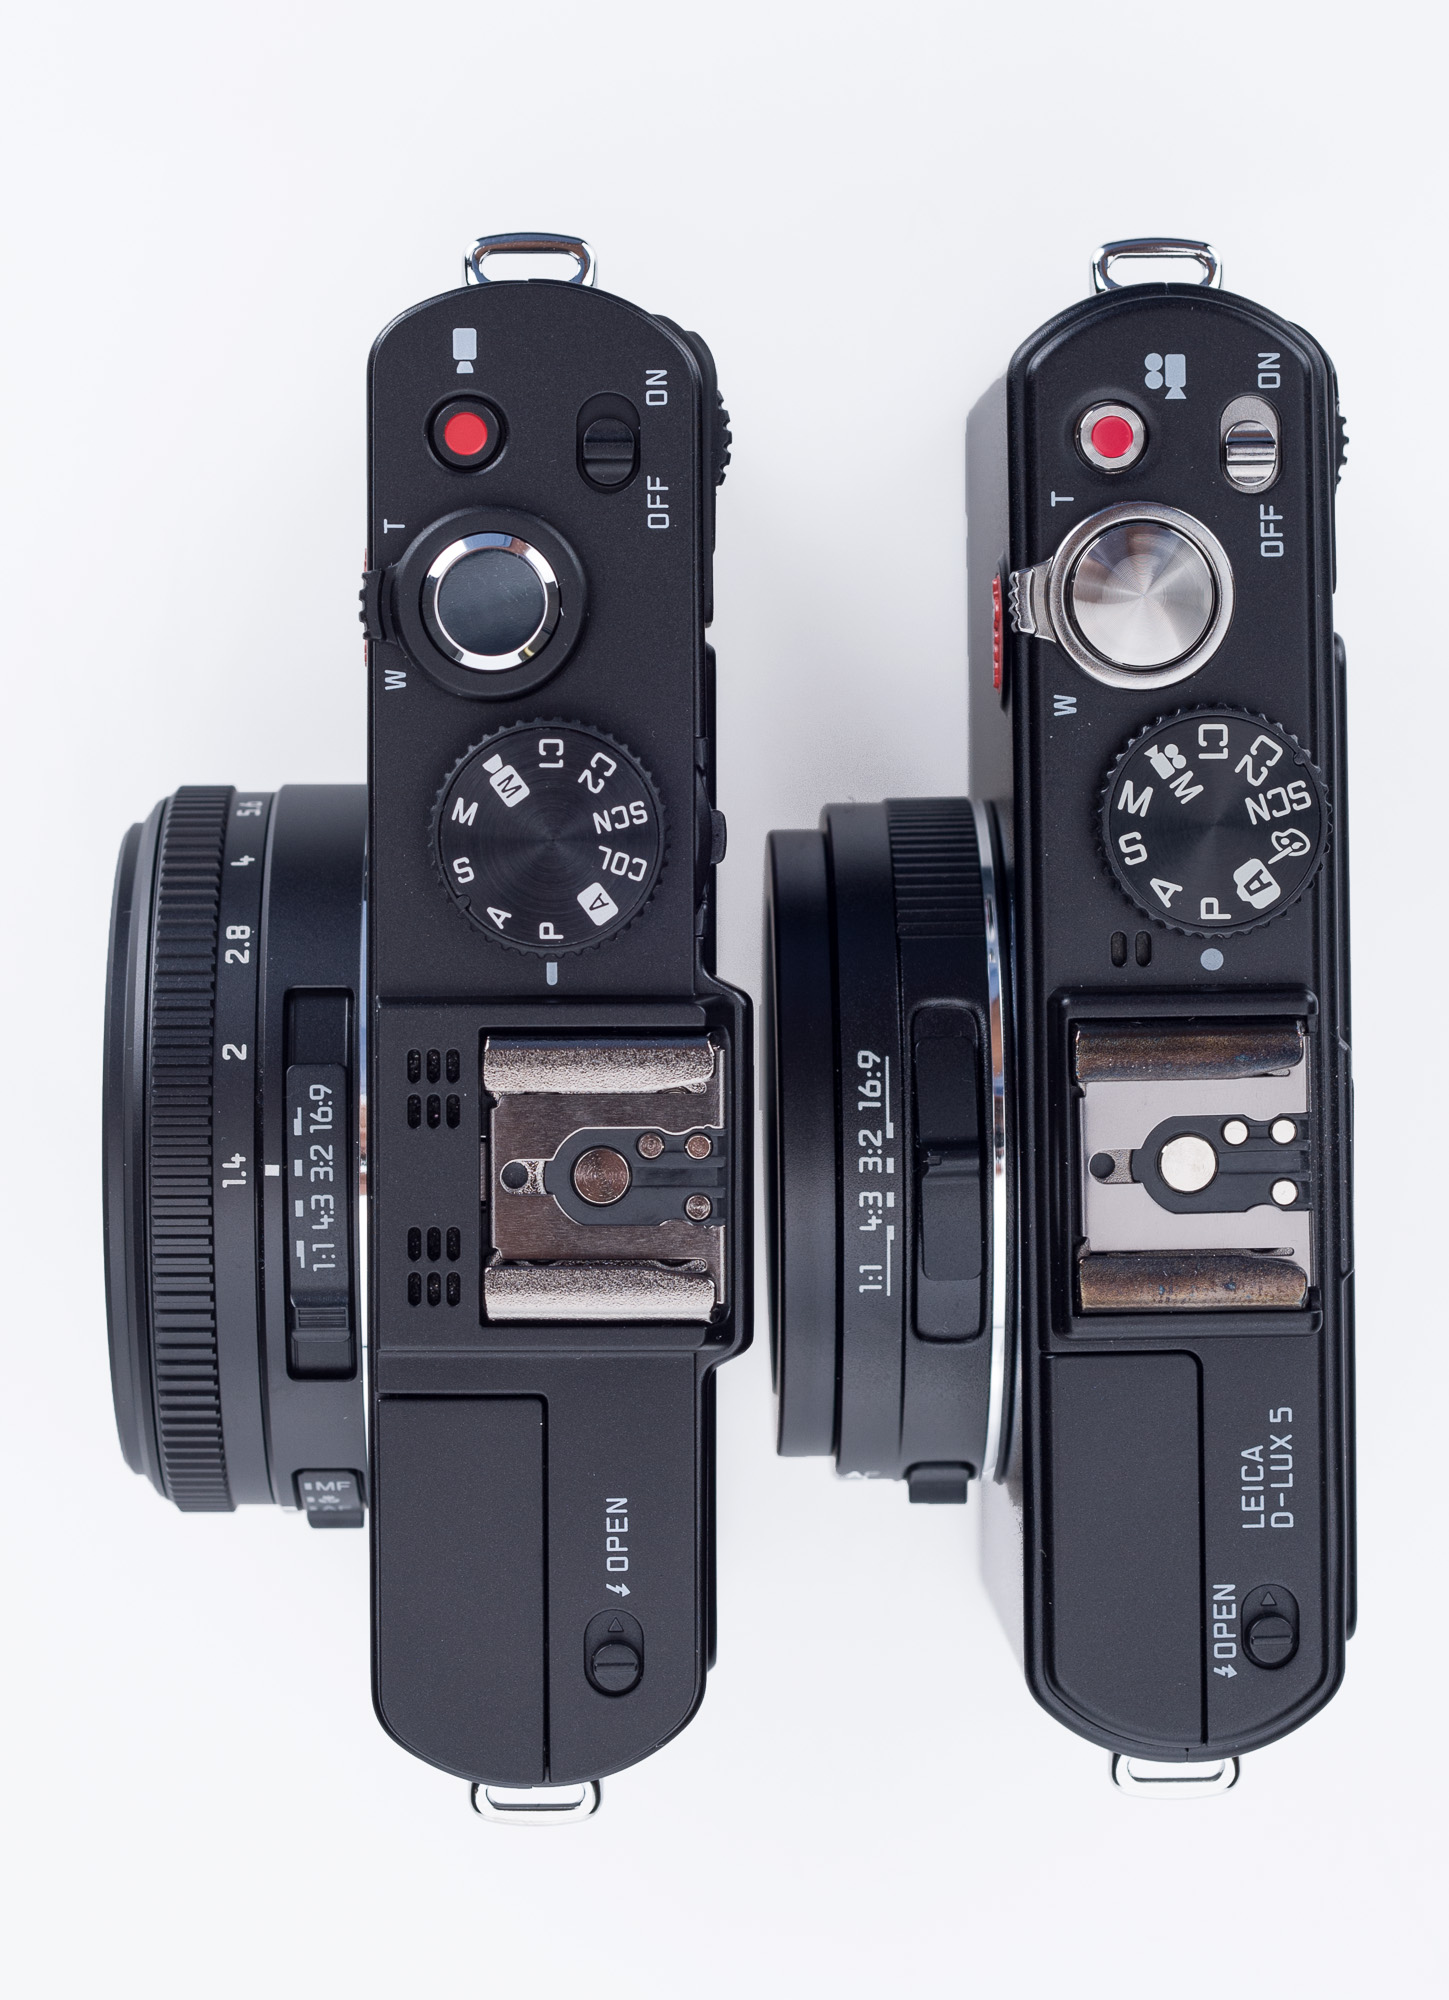 Leica D-Lux 6 Digital Cameras